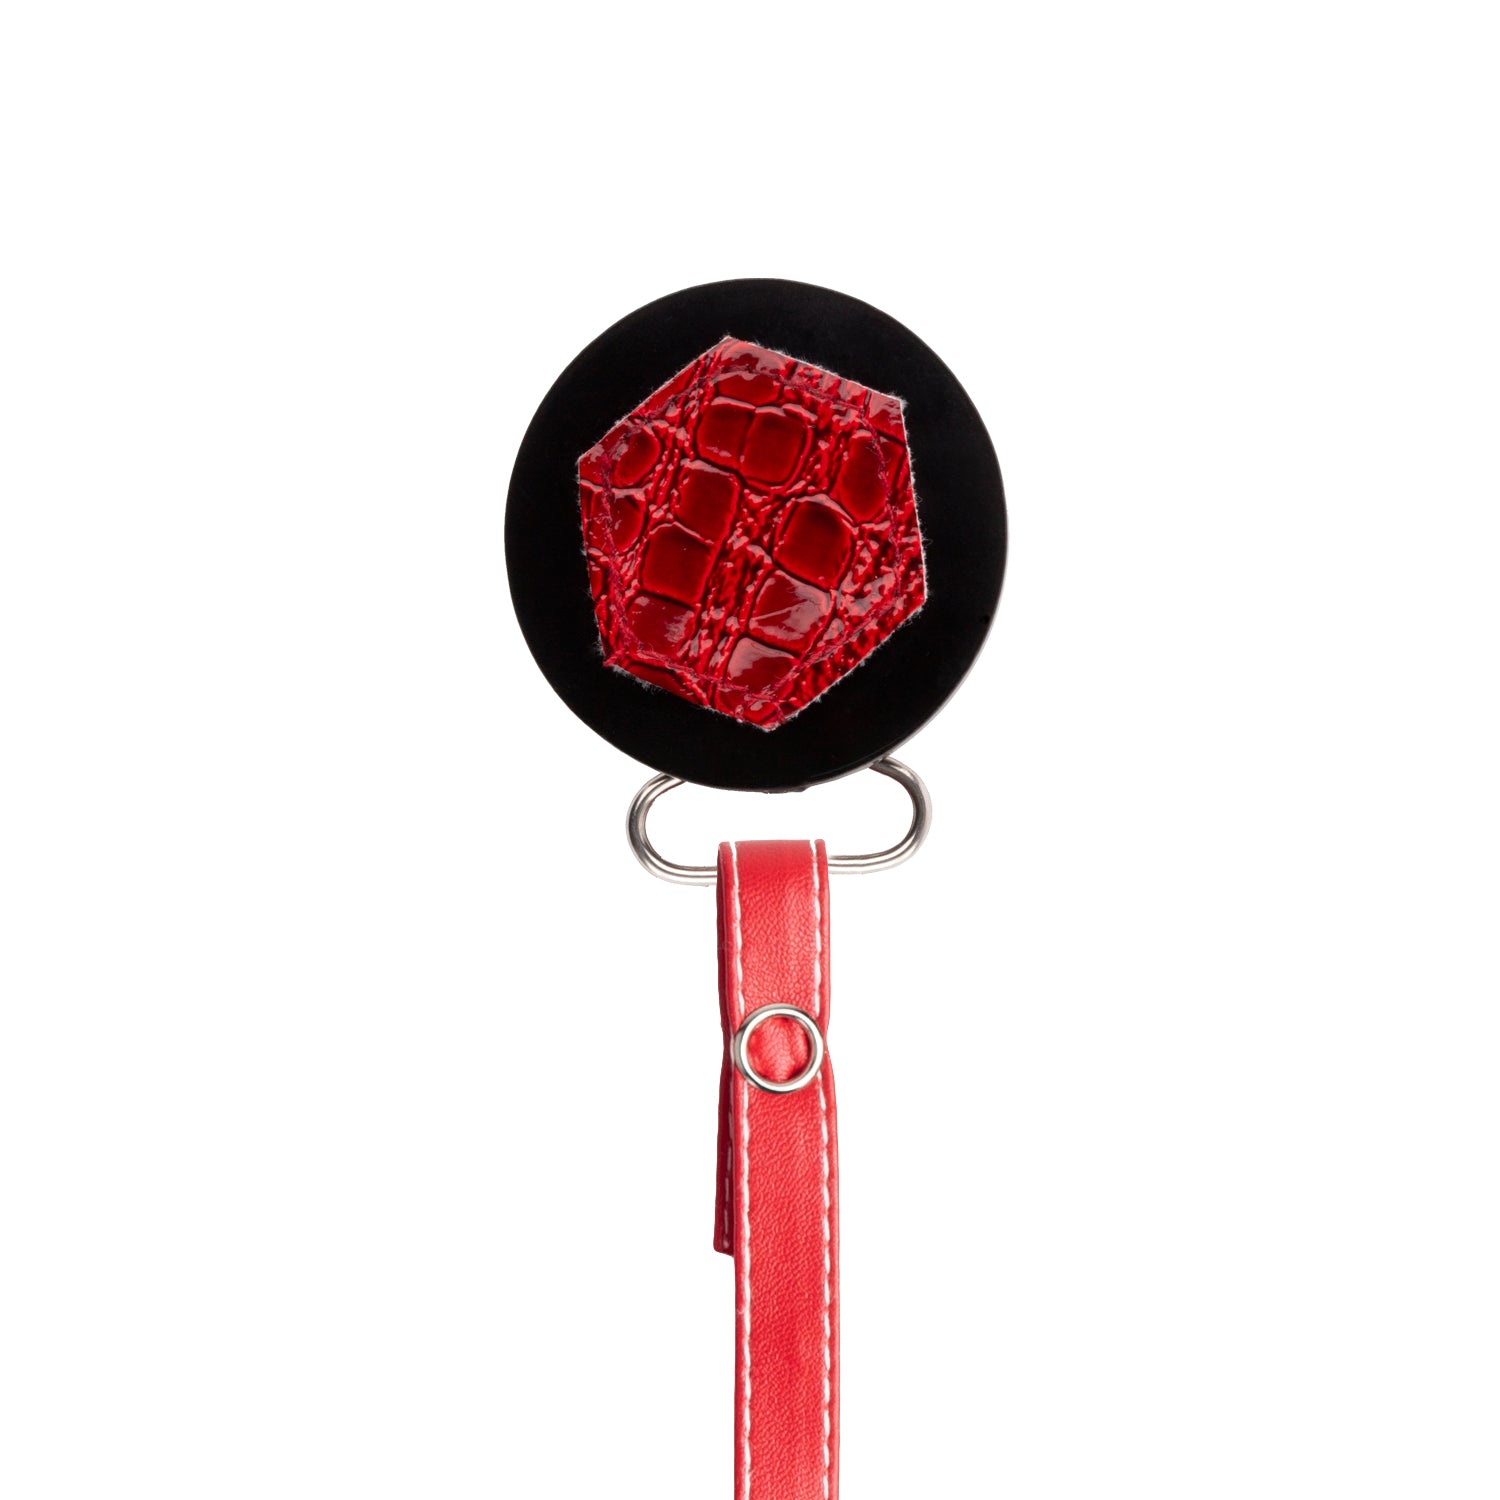 Classy Paci Maroon Croc Hexagon, red, black, burgundy pacifier clip